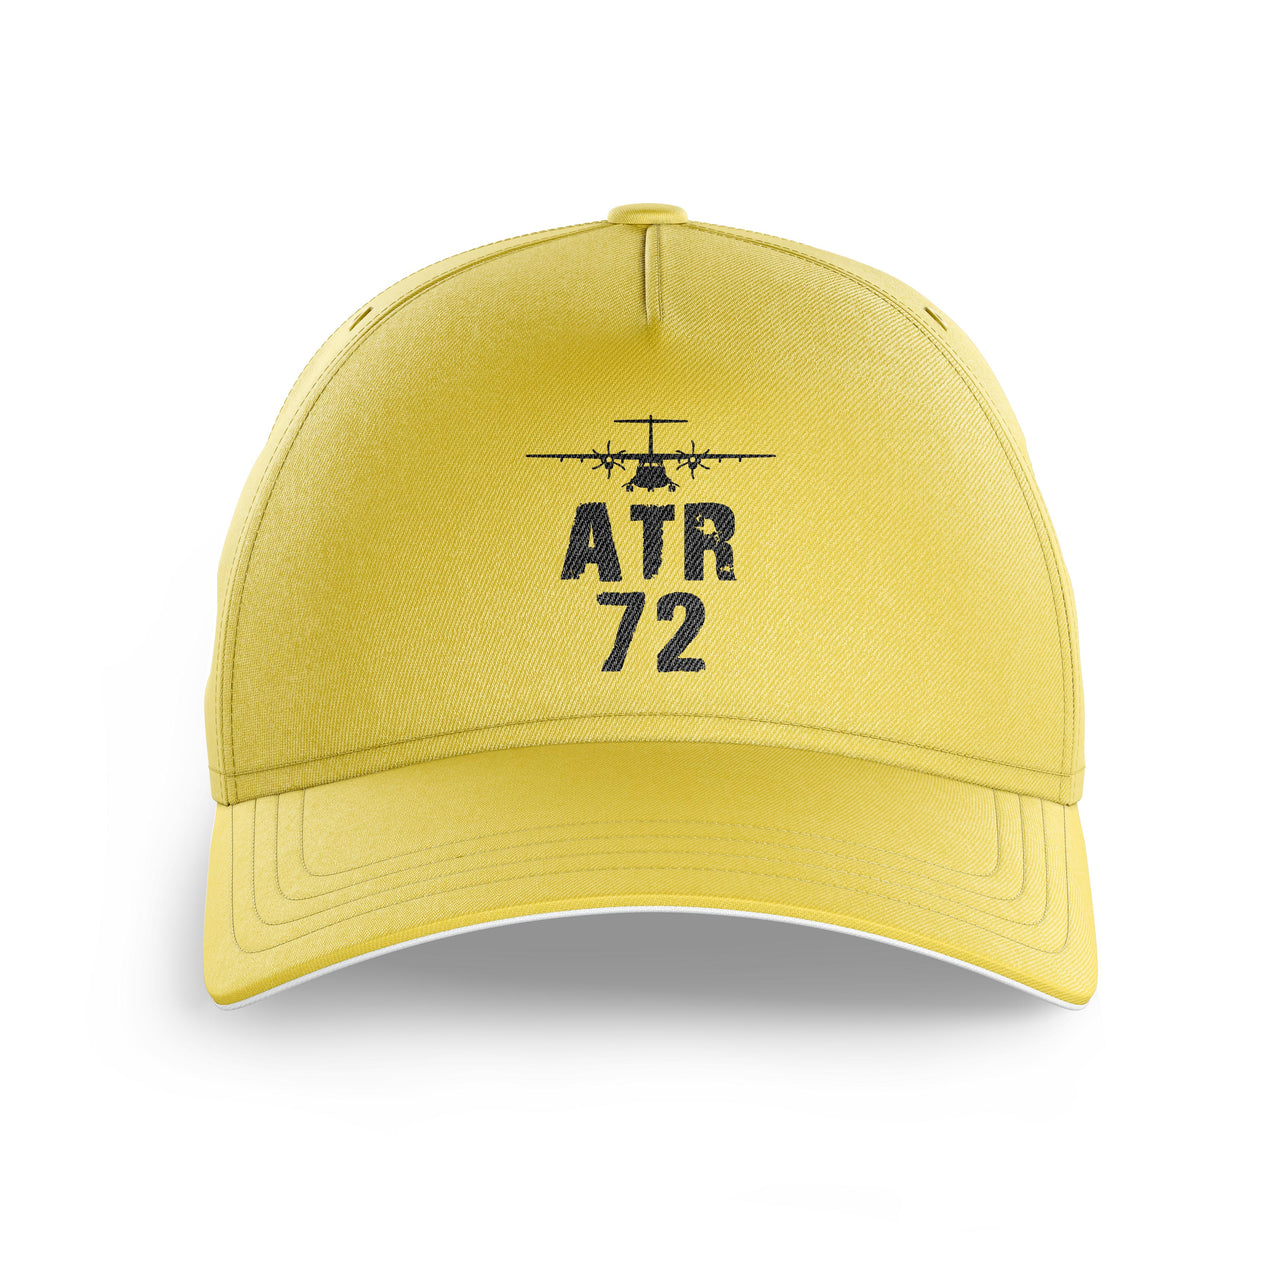 ATR-72 & Plane Printed Hats